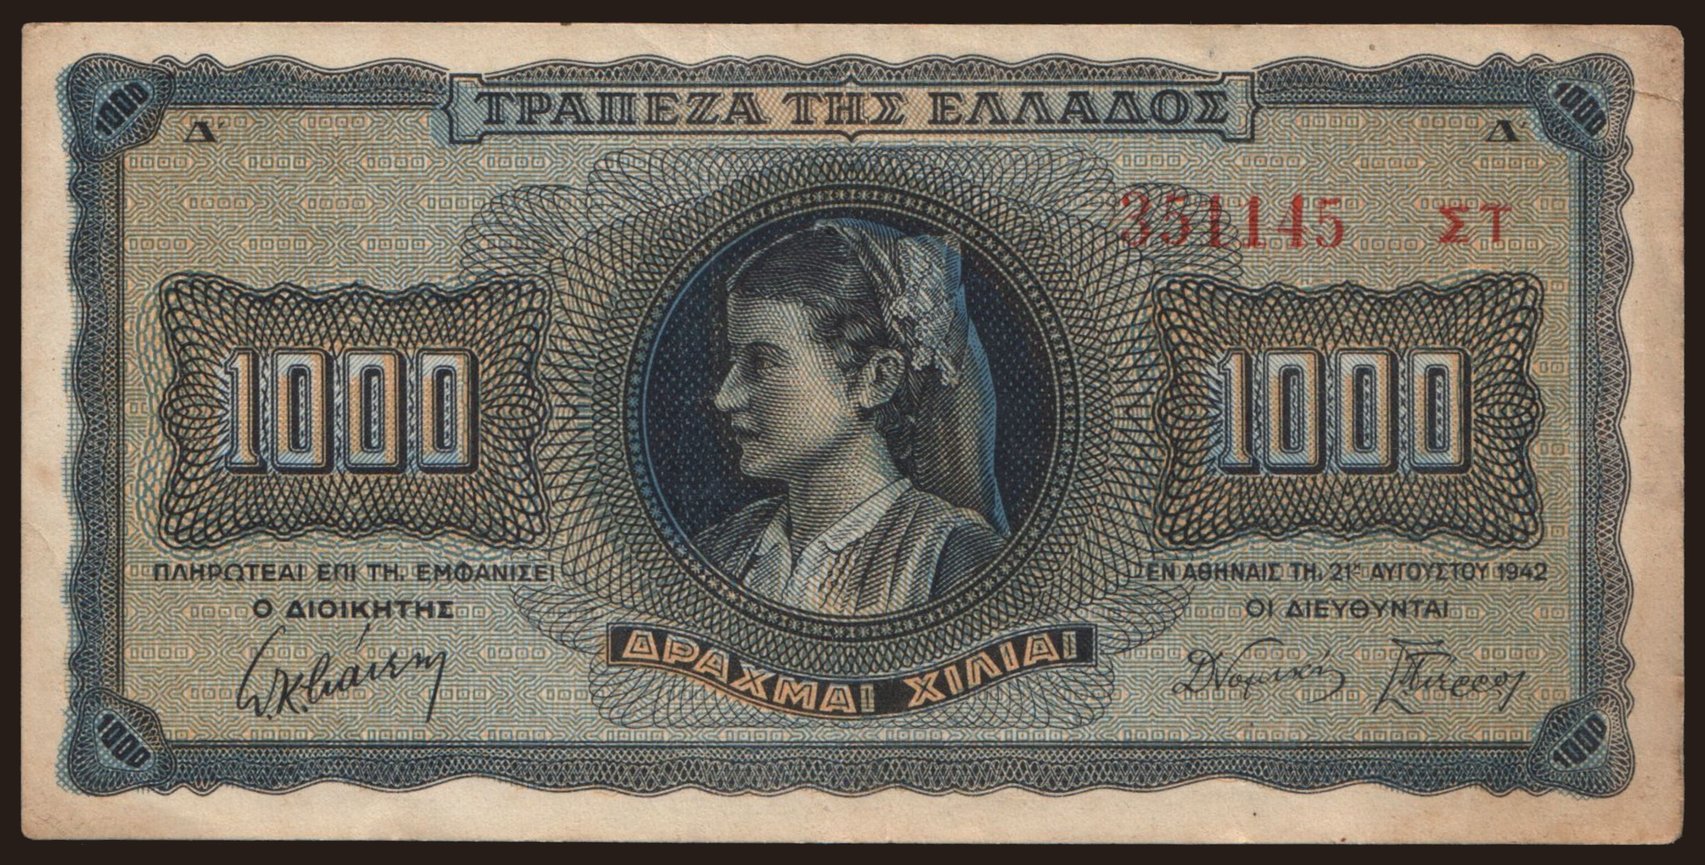 1000 drachmai, 1942